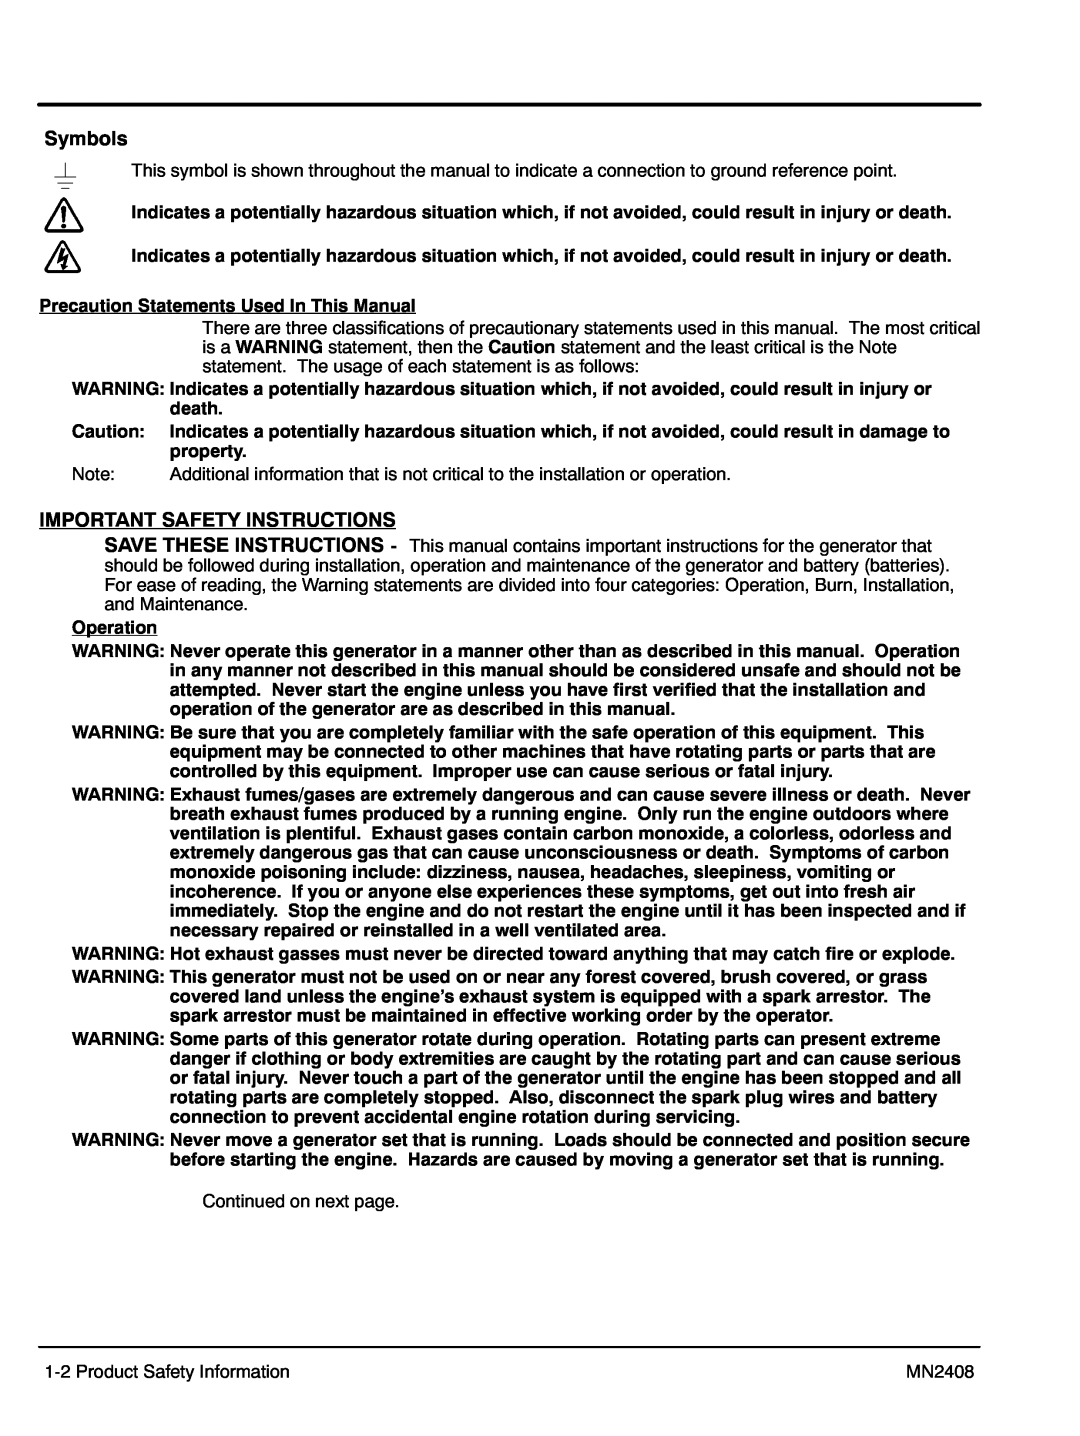 Baldor GLC30, GLC10, GLC60 Symbols, Important Safety Instructions, Precaution Statements Used In This Manual, Operation 